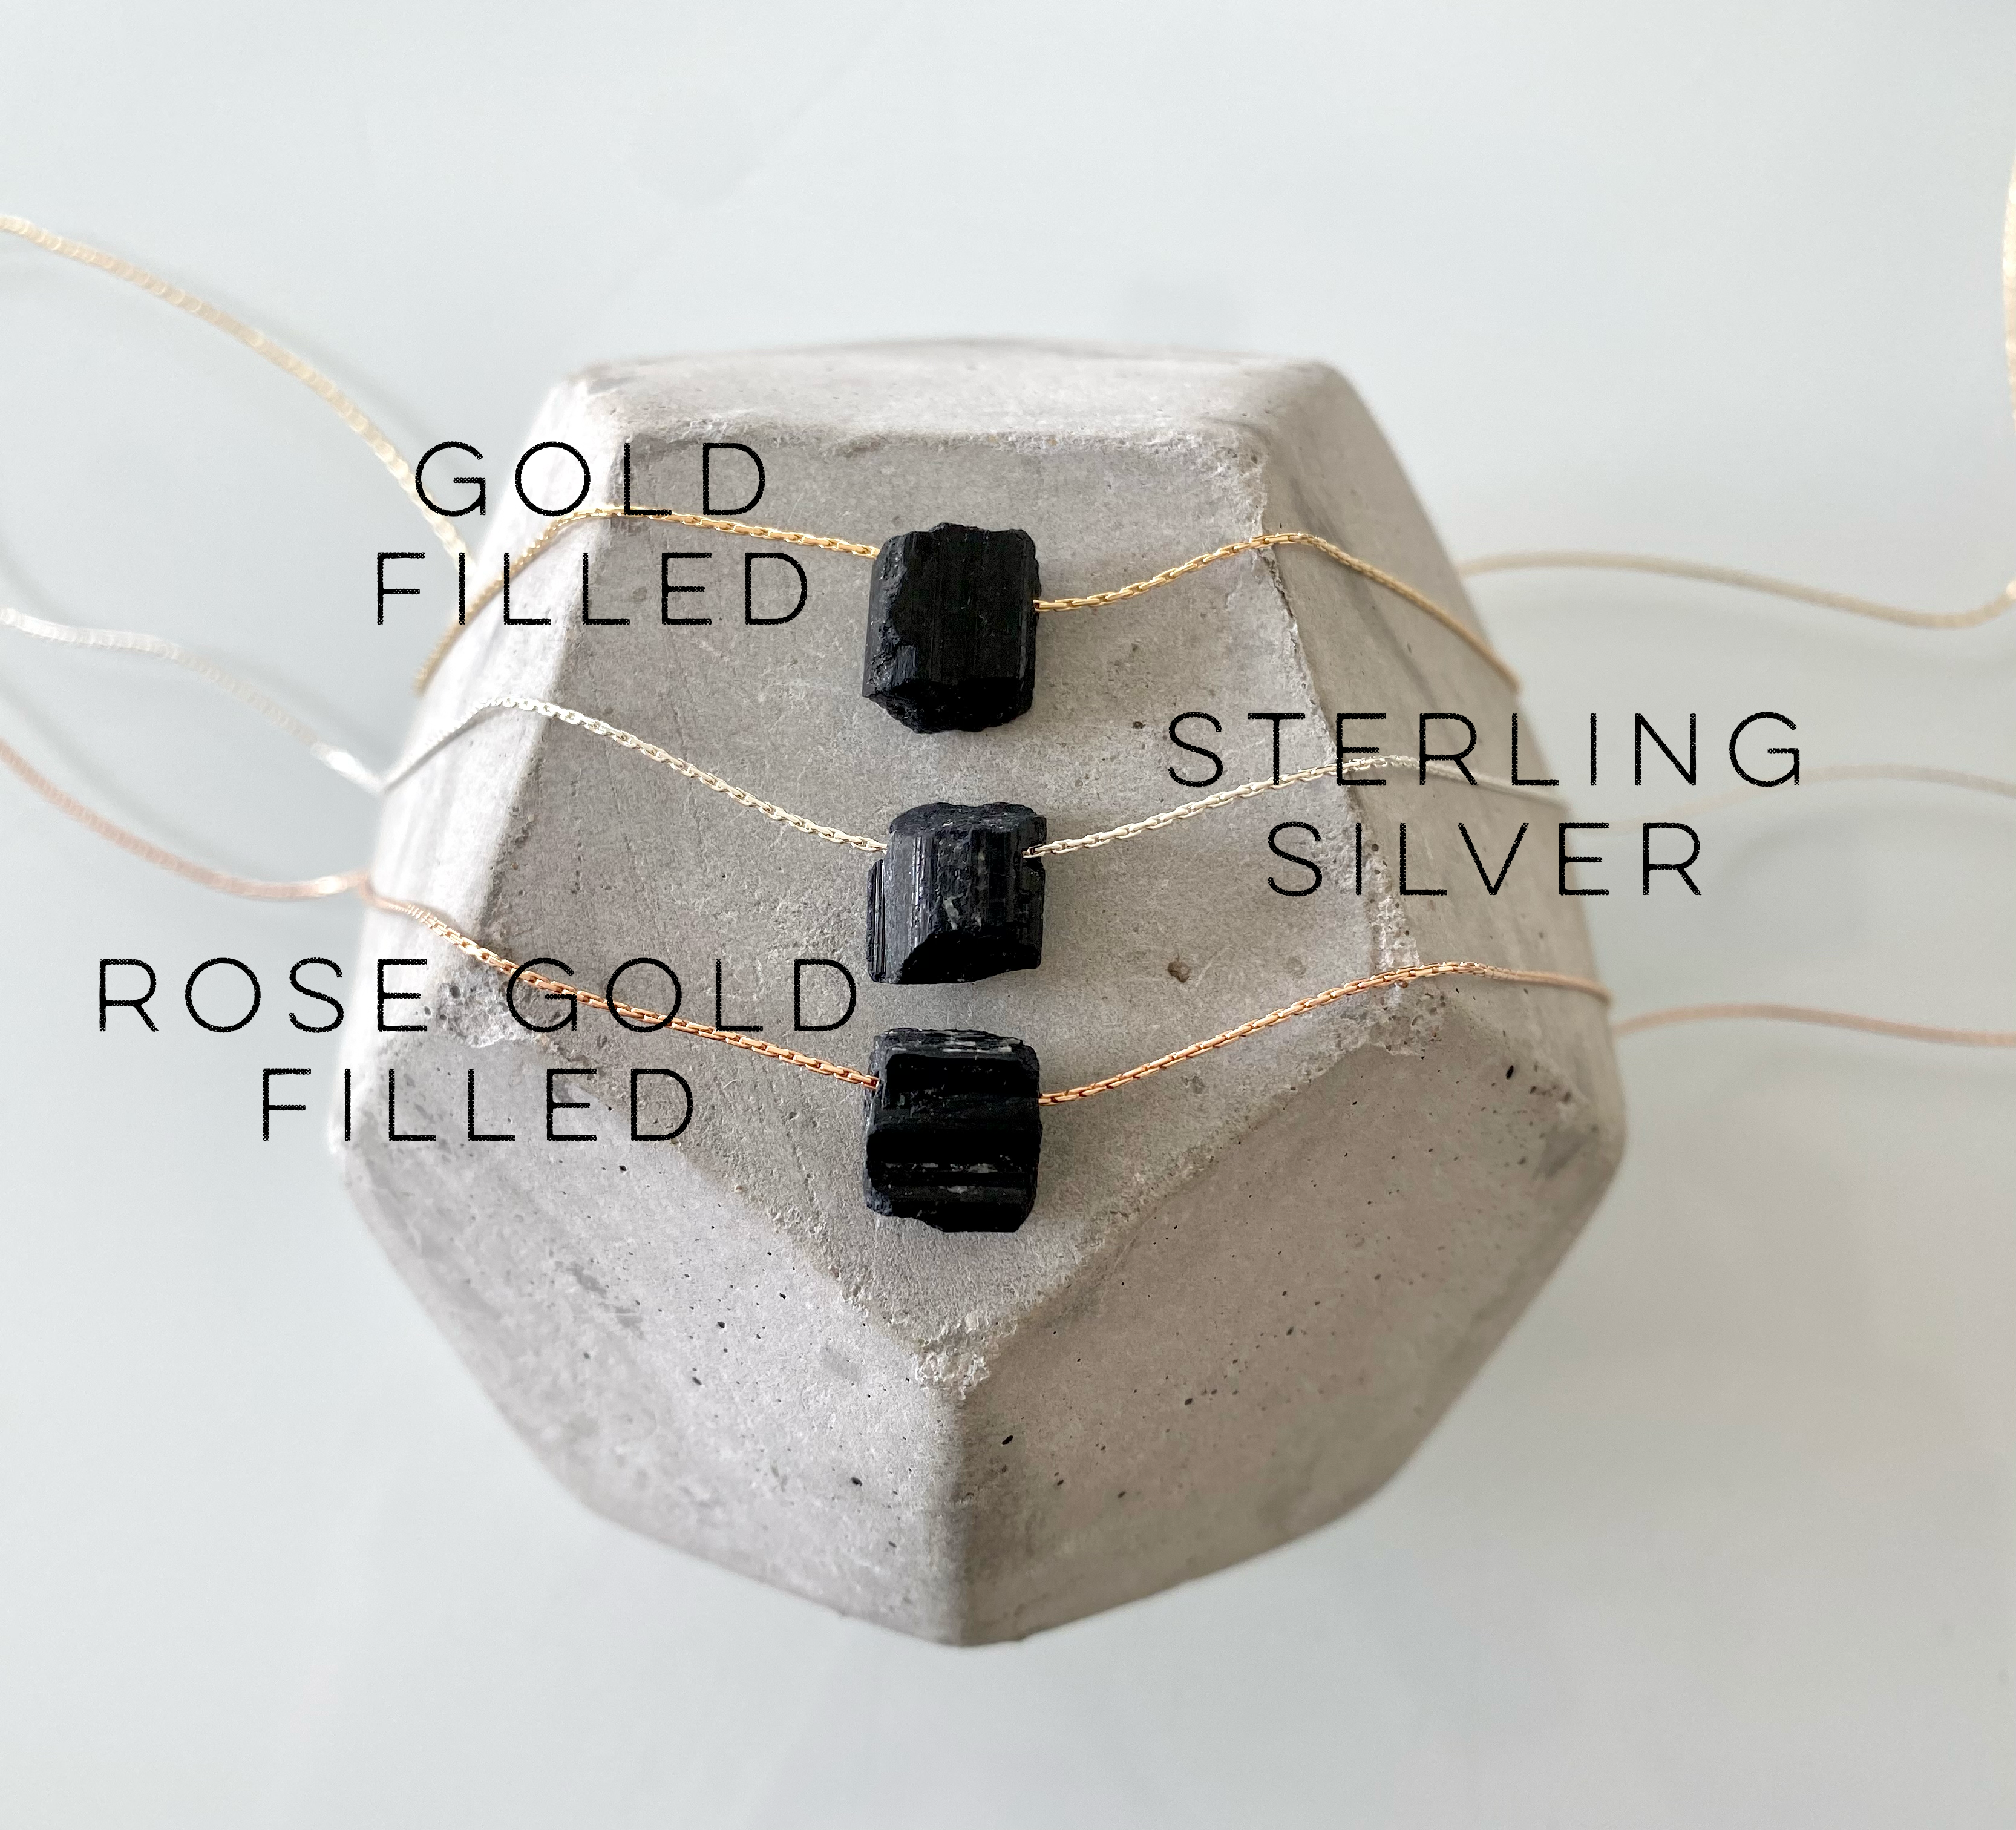 Raw Black Tourmaline Floating Pendant Necklace - Gold Filled Sterling Silver Rose Gold Filled